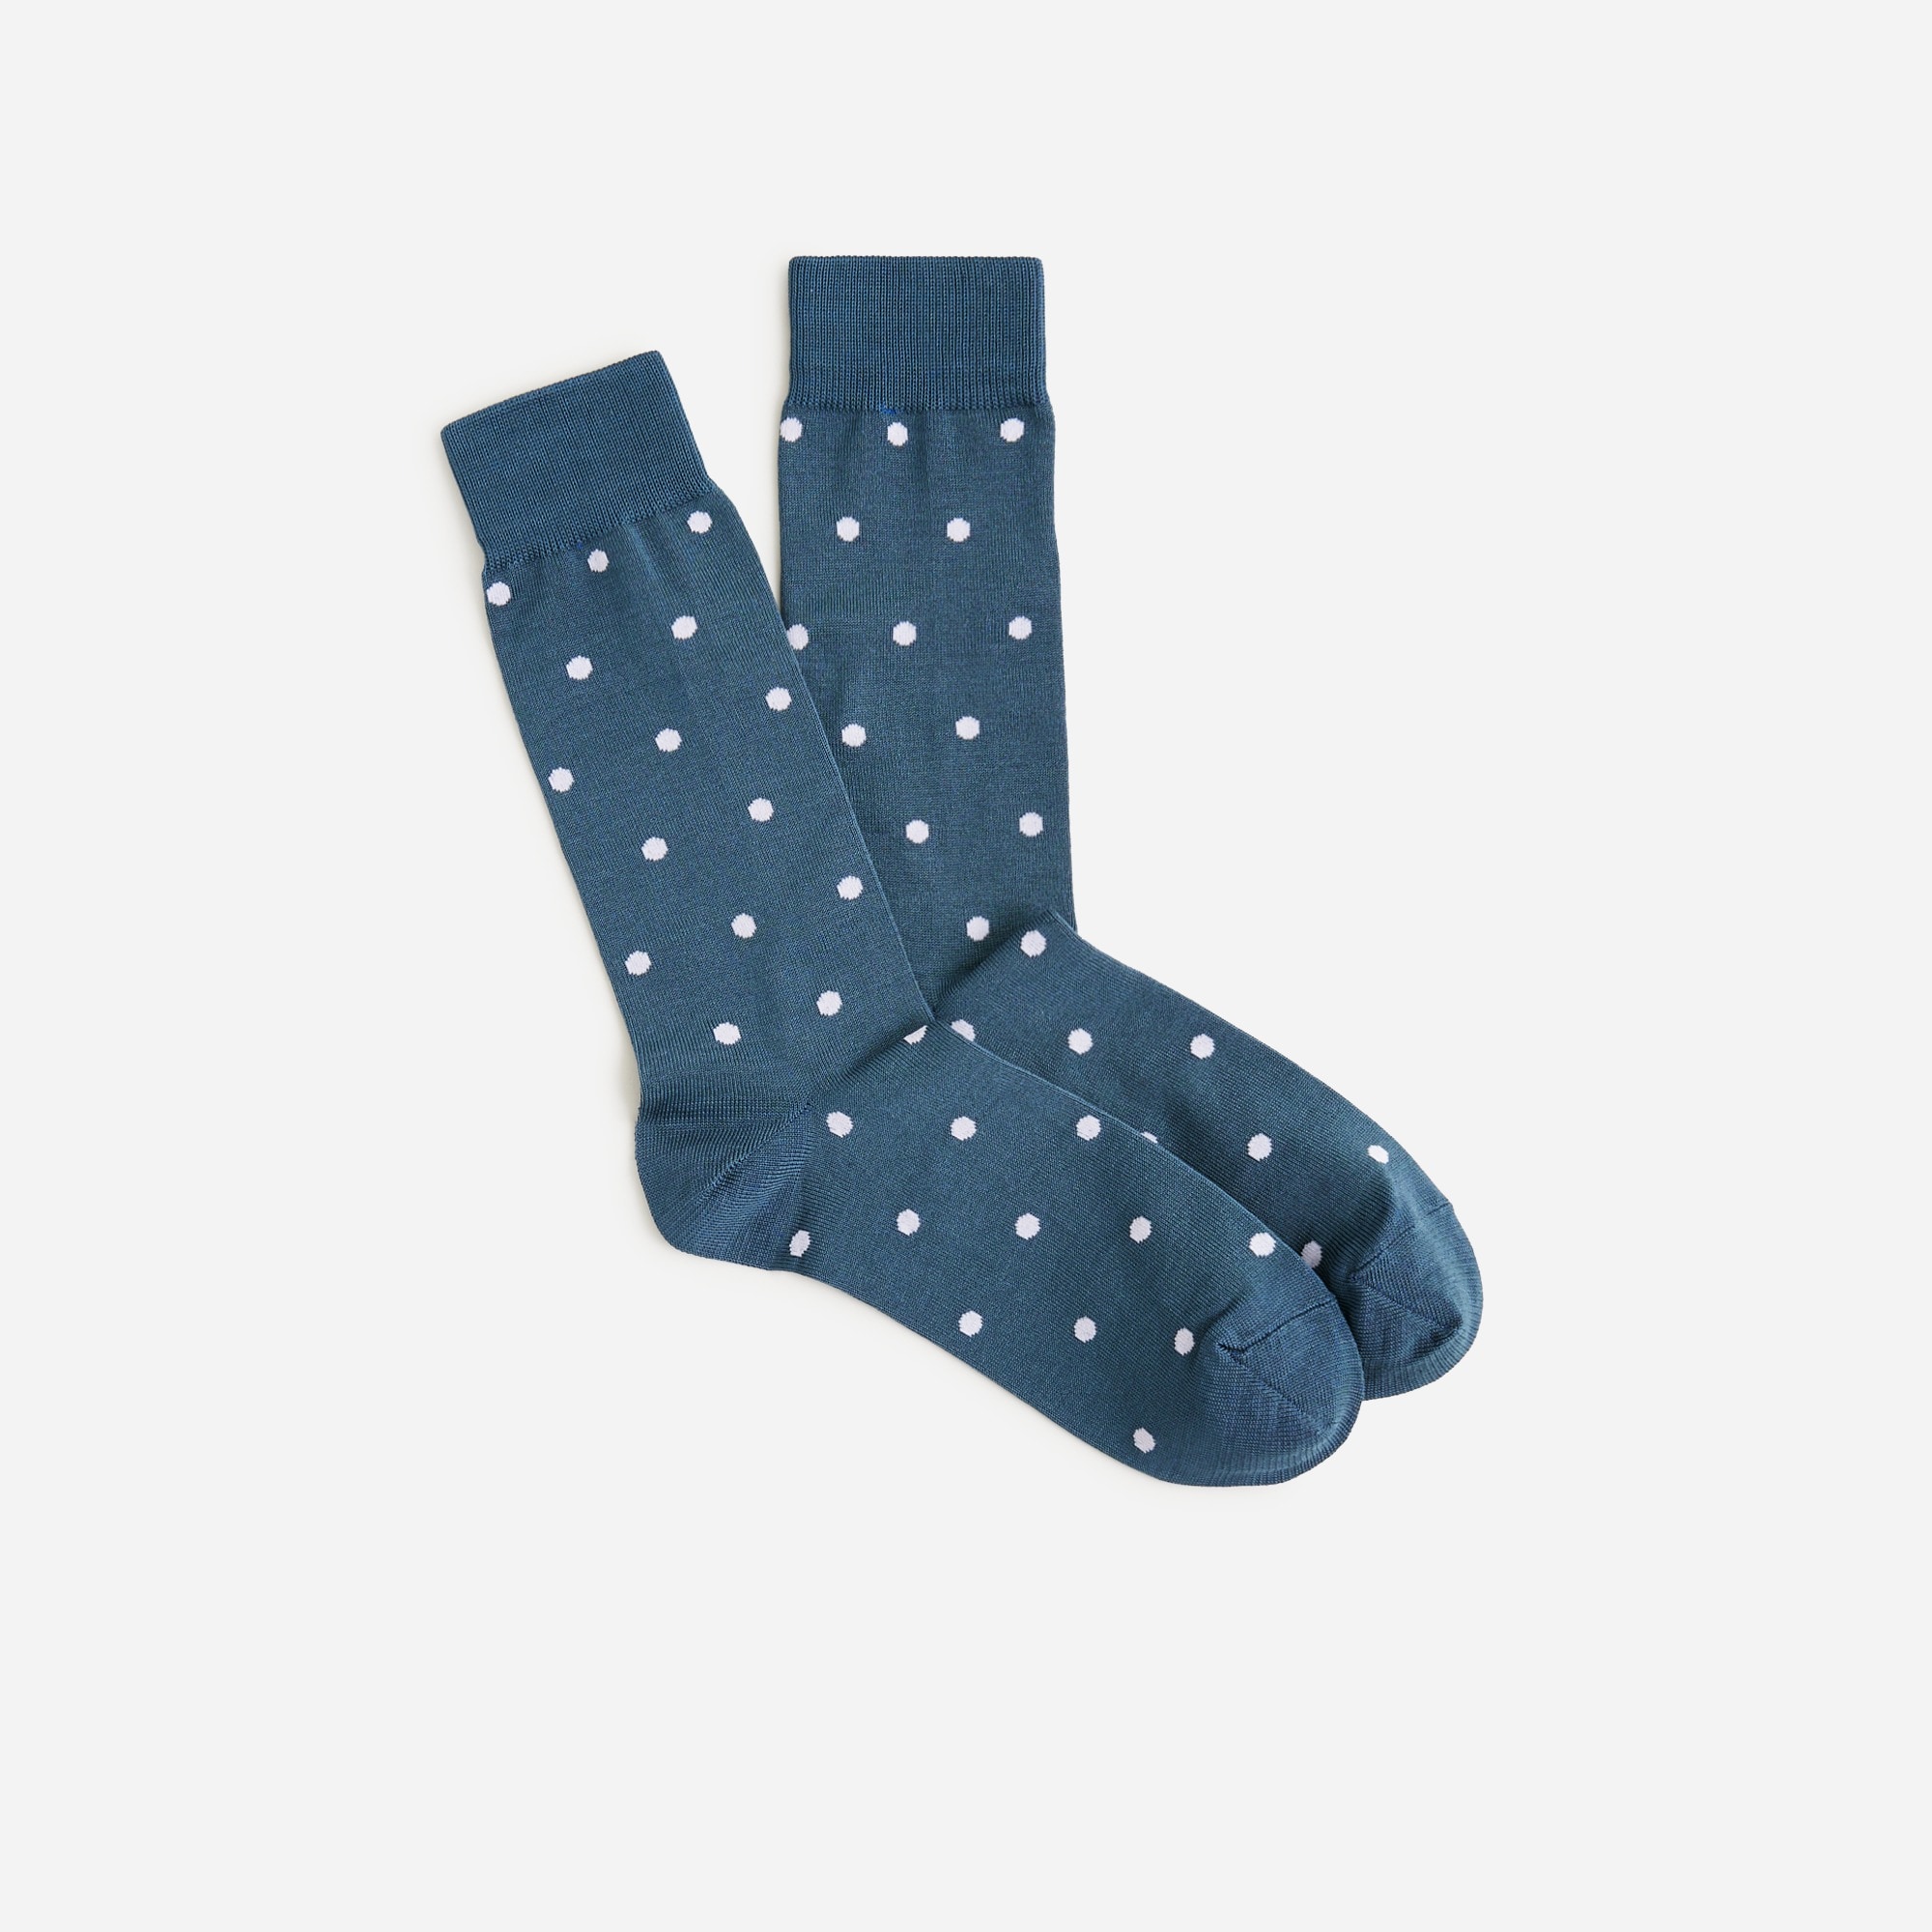  Dress socks in dots